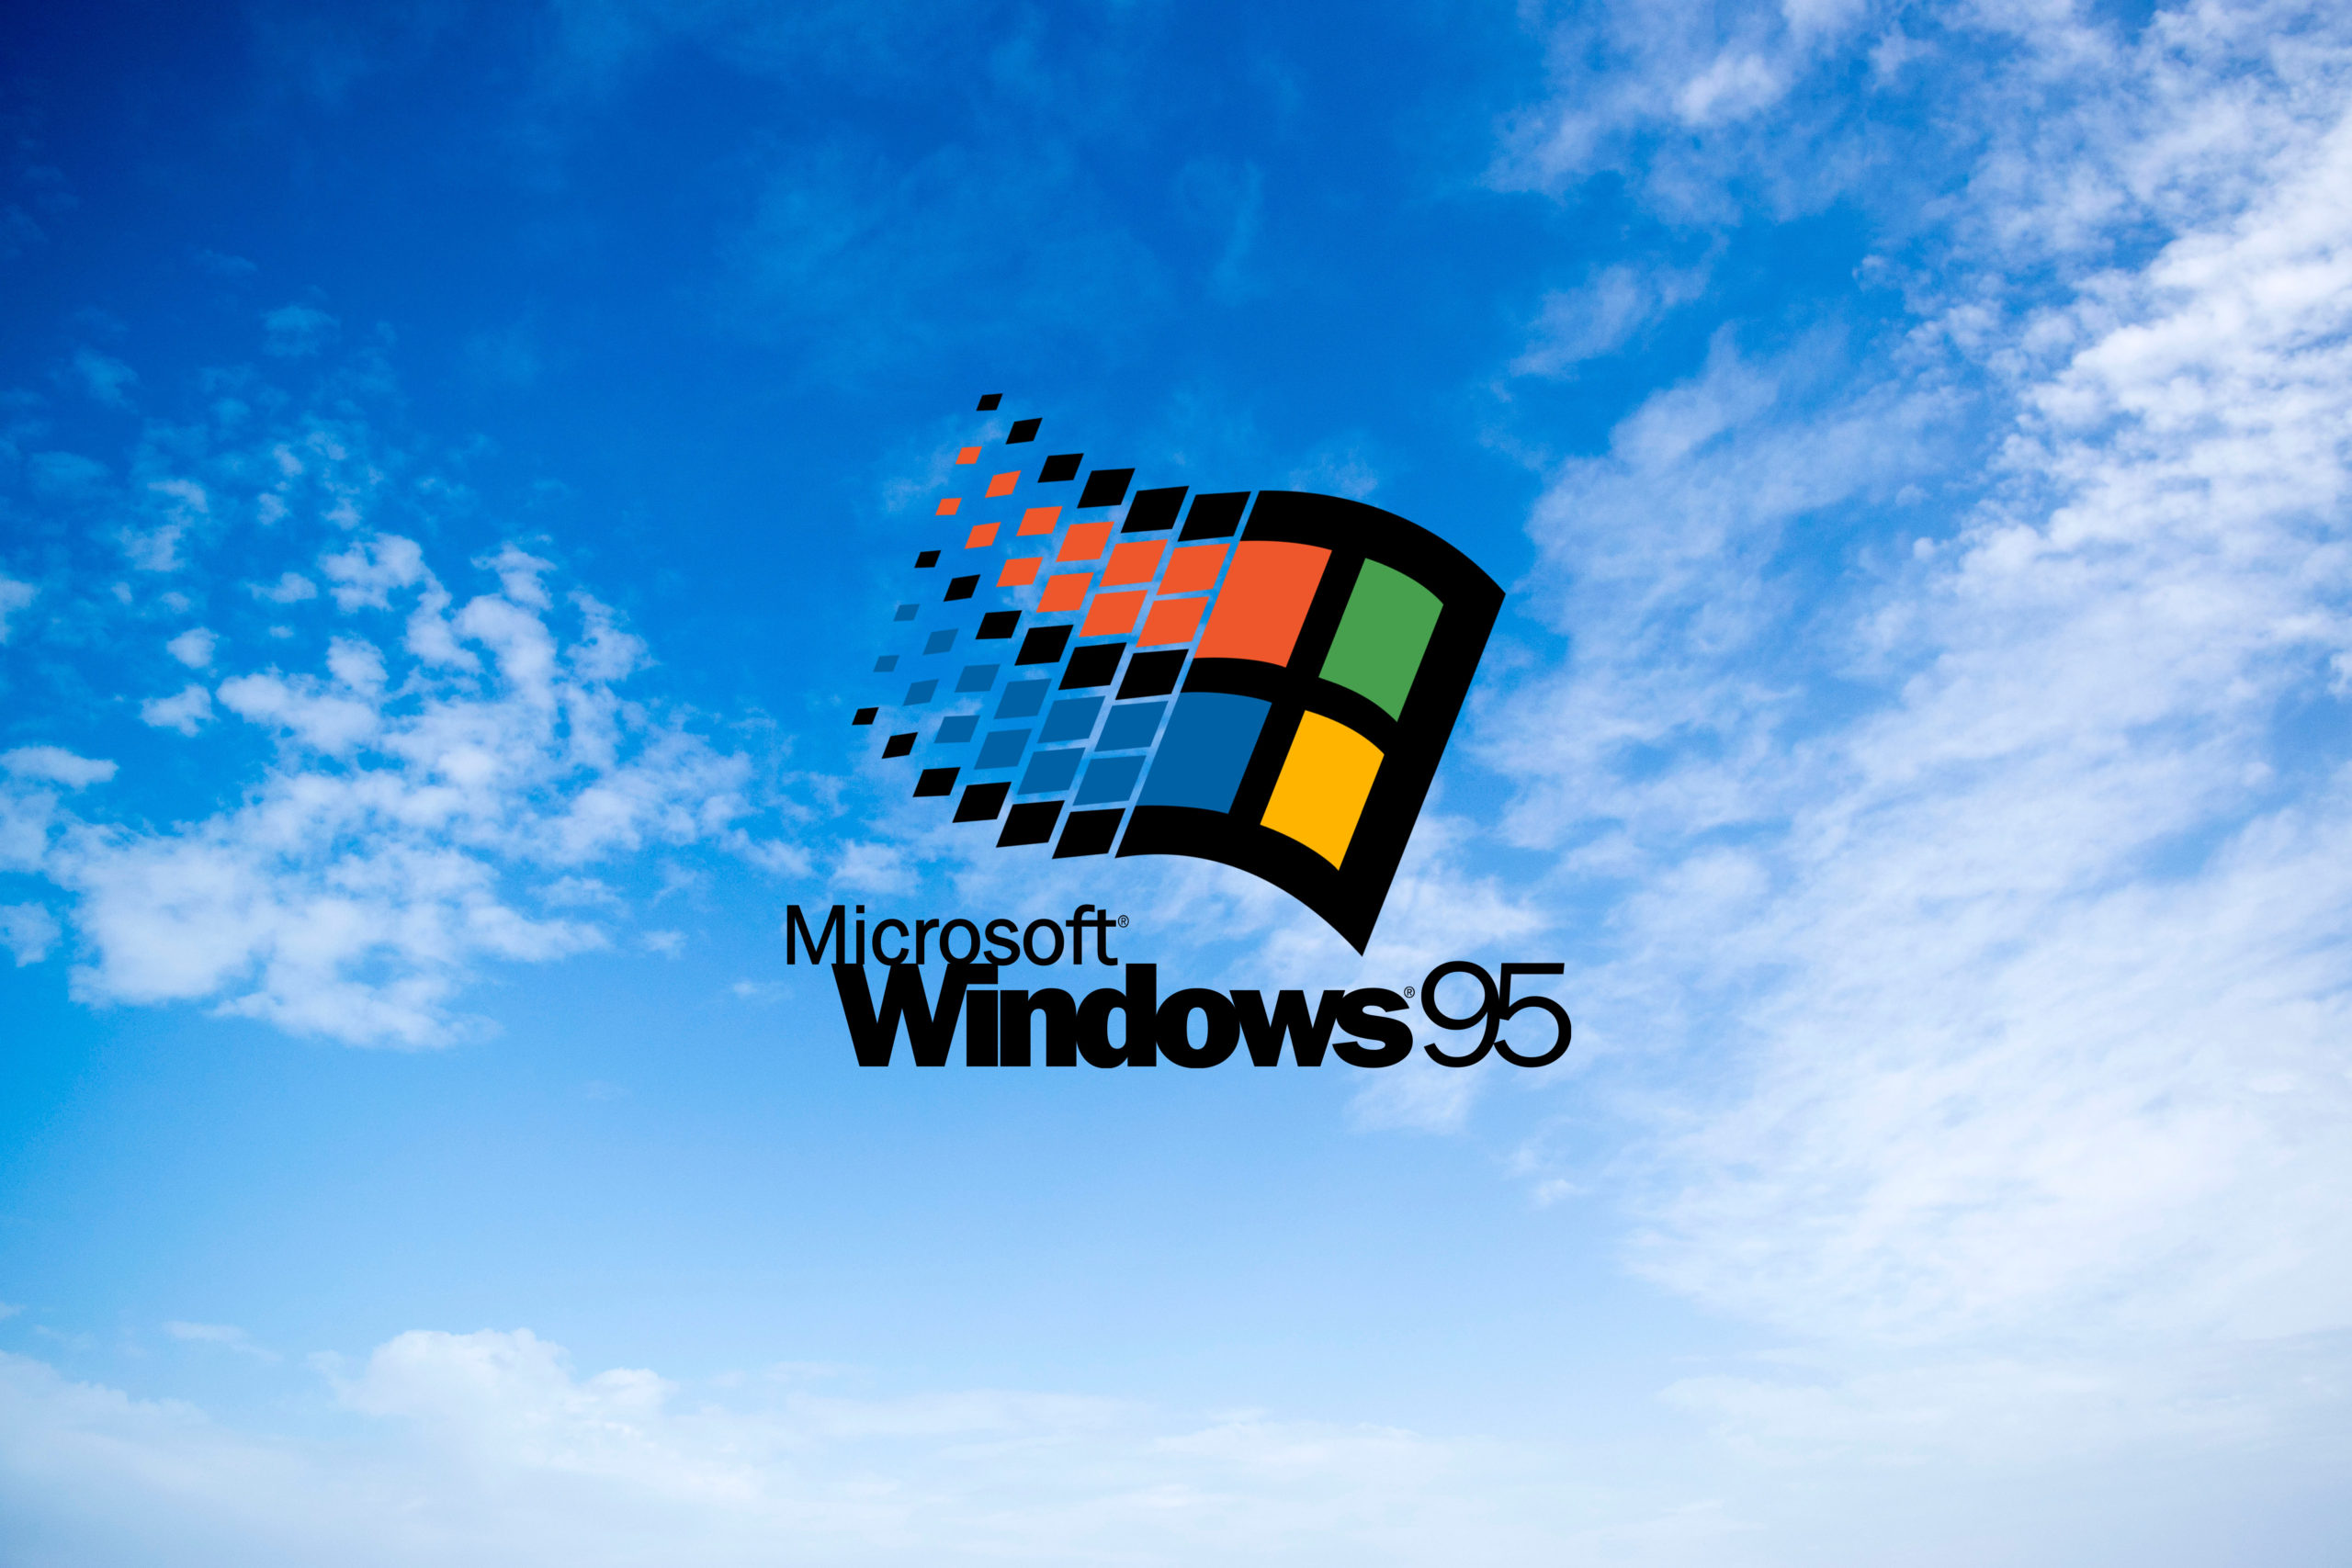 Chia sẻ - Share 45 Hình nền windows 10 FULL HD | DesignerVN